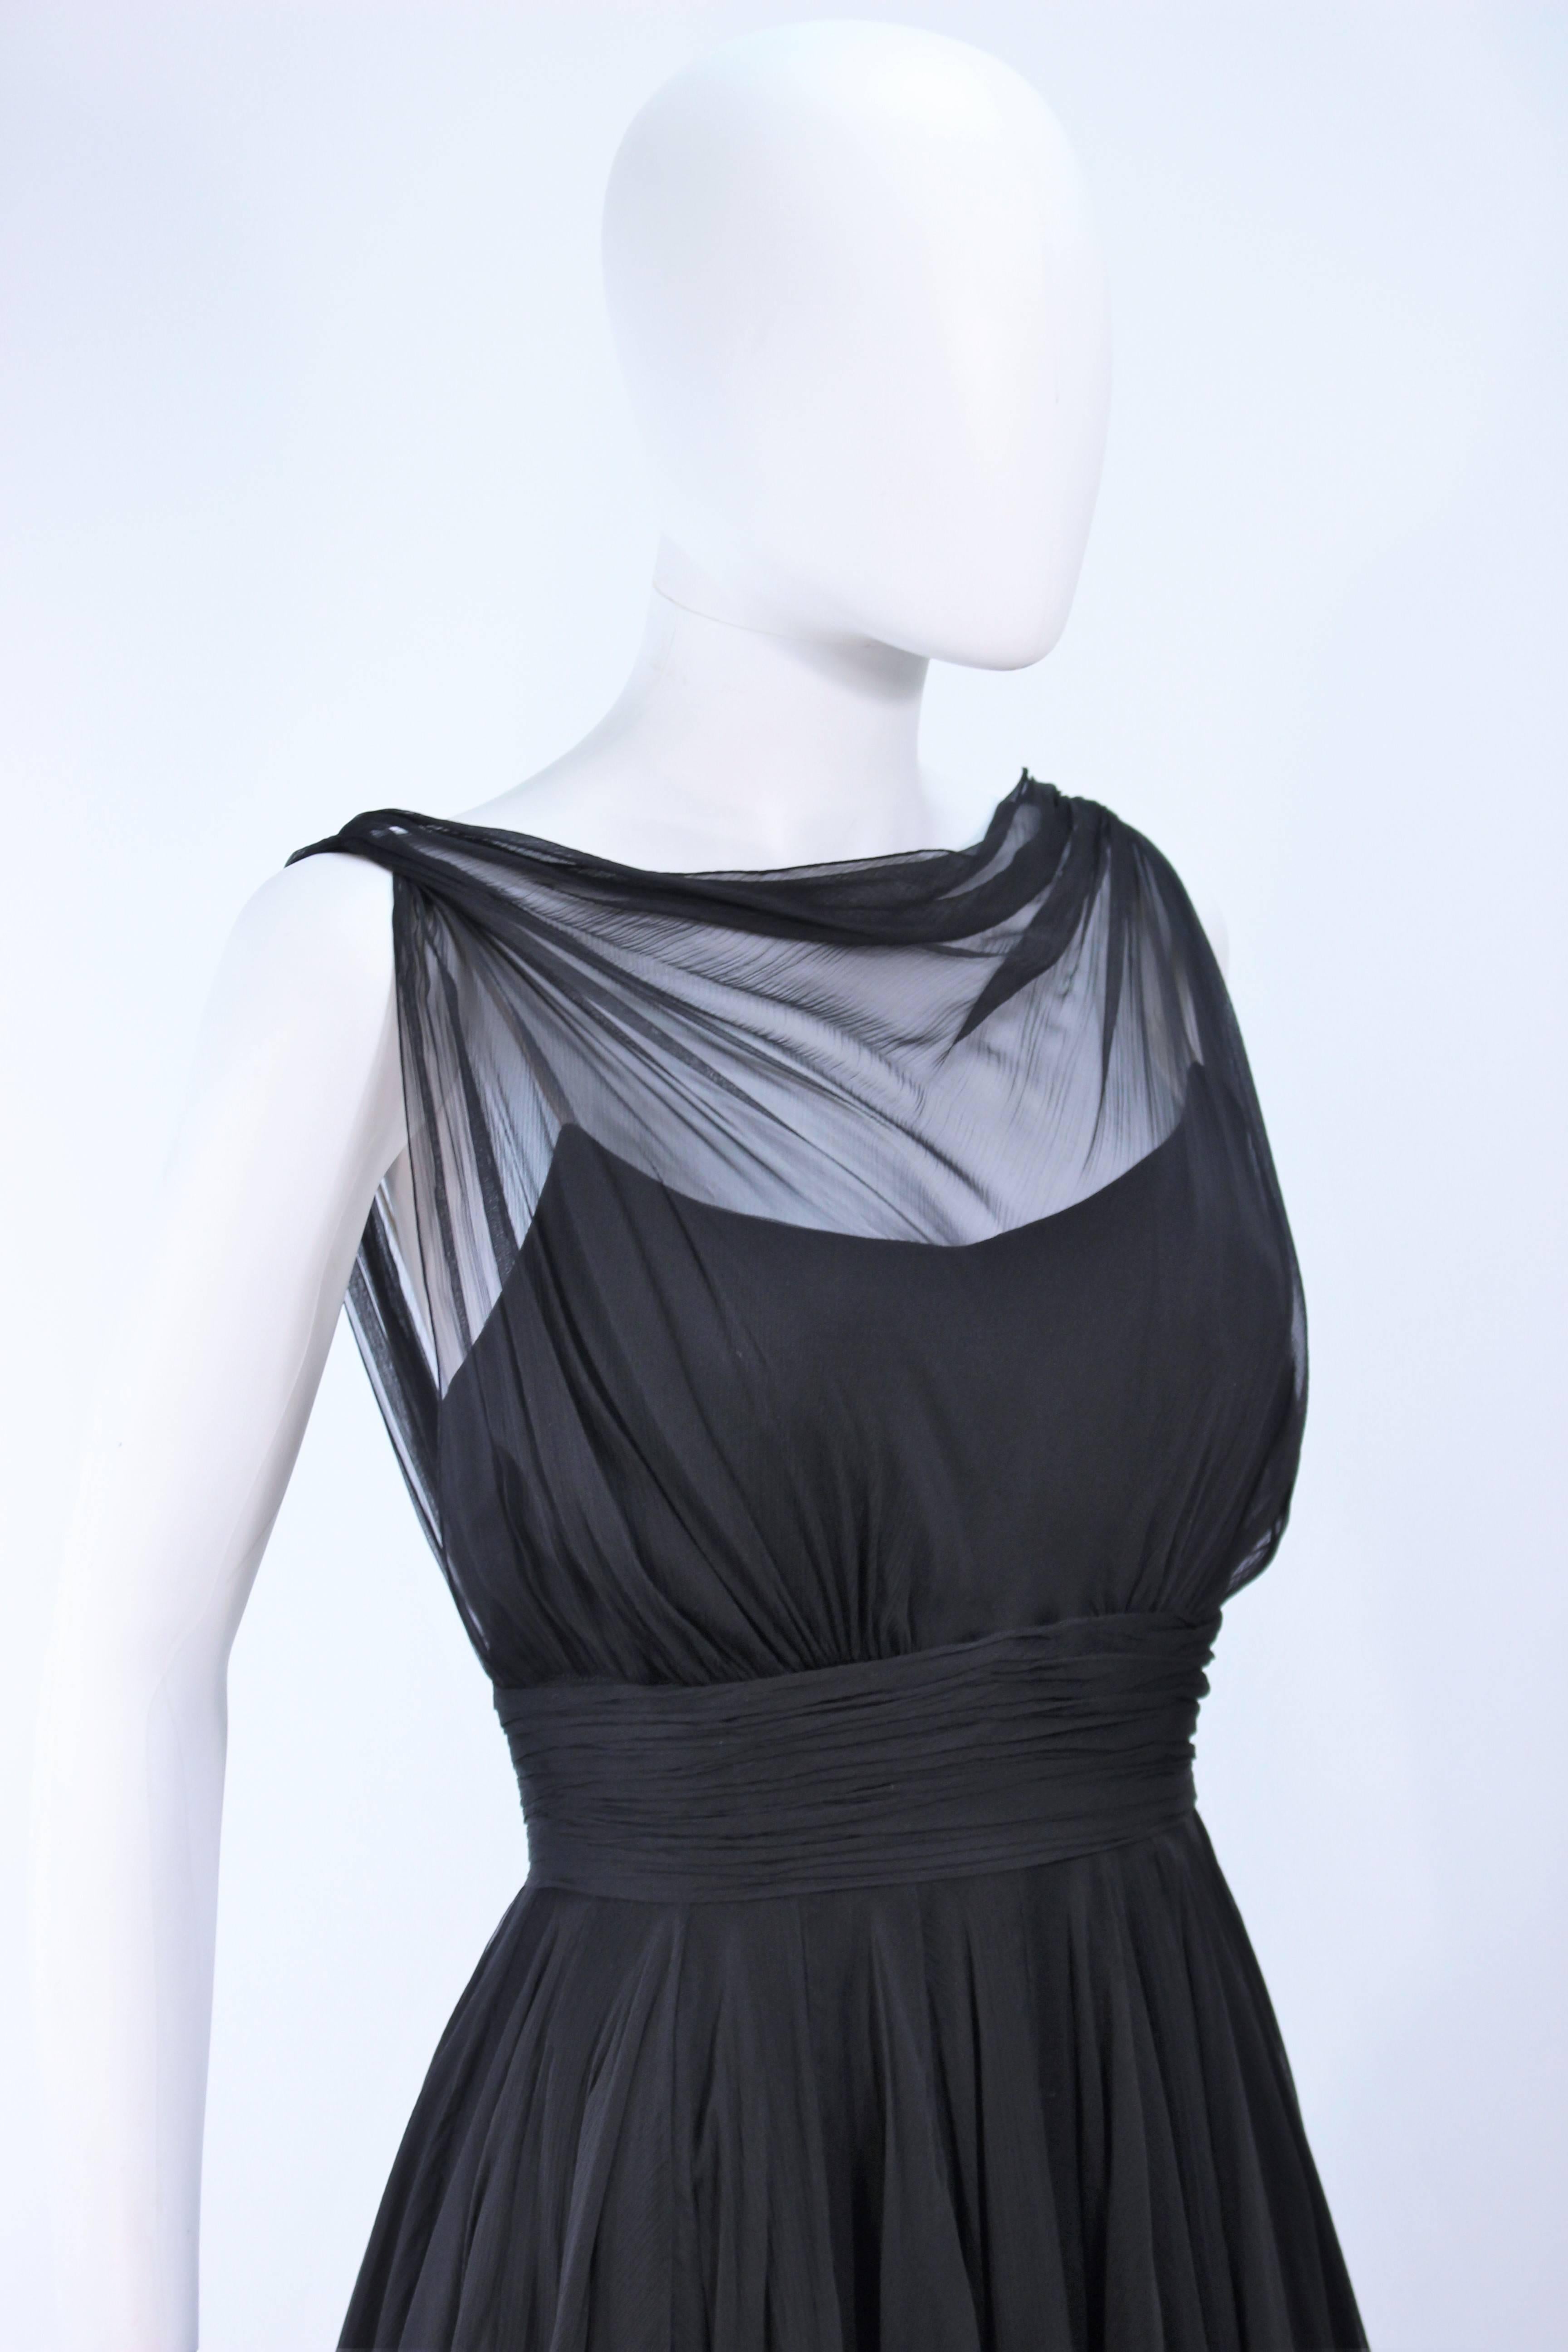 GALANOS Black Silk Chiffon Draped Cocktail Dress Size 2  For Sale 3